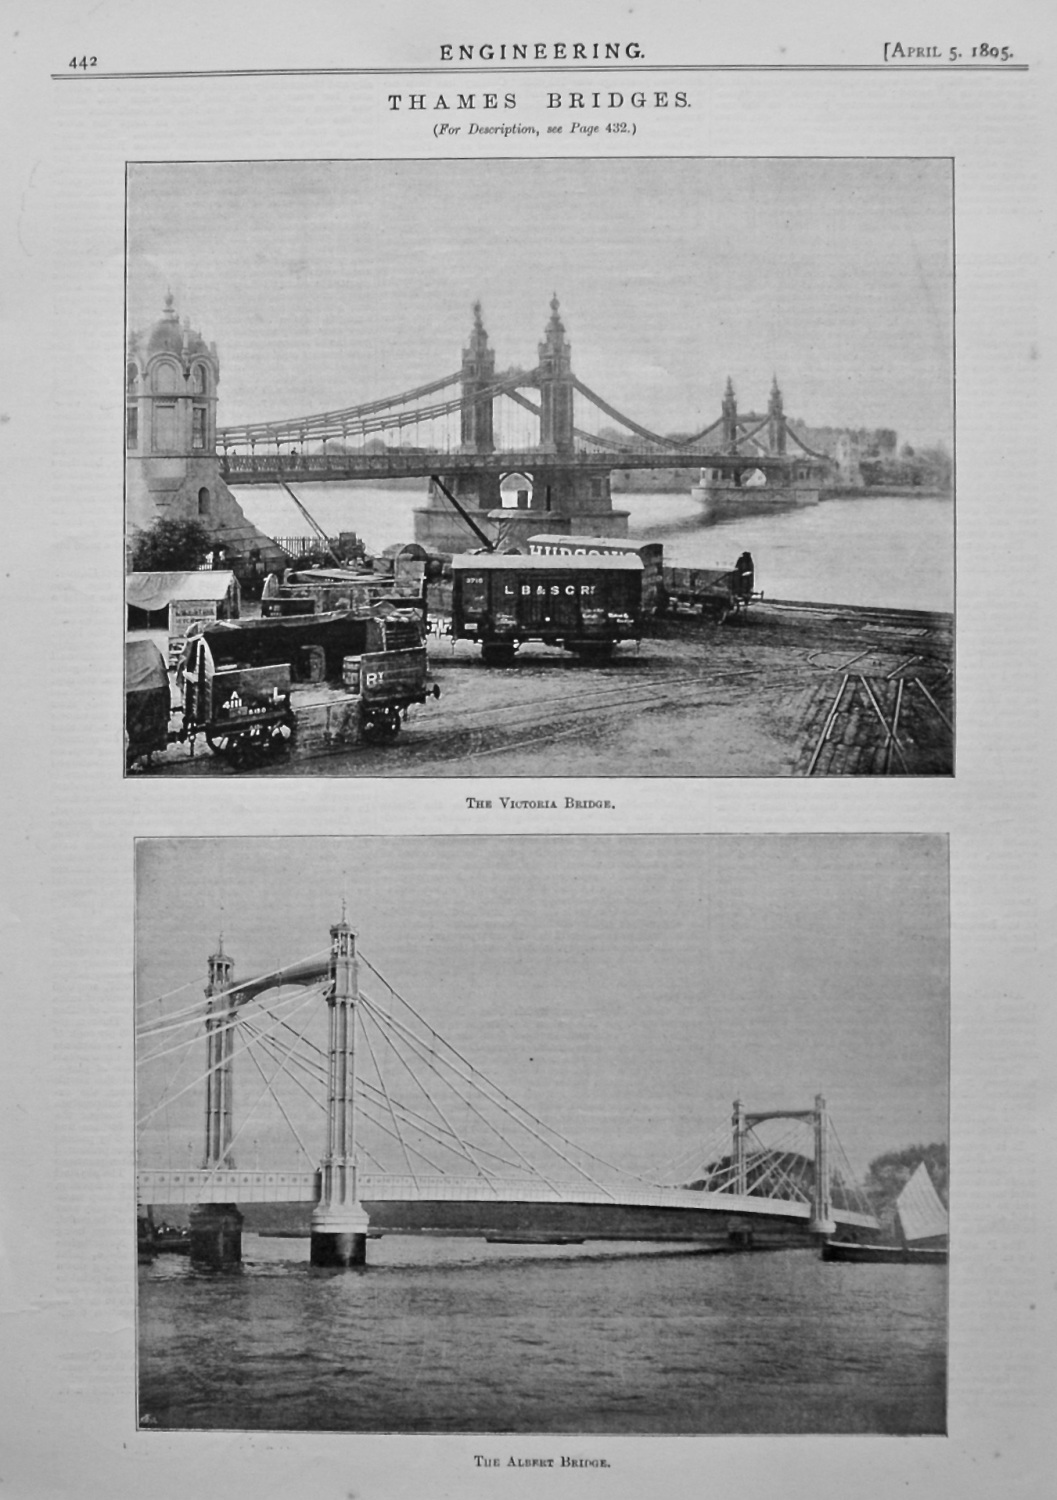 Thames Bridges : The Victoria Bridge, and The Albert Bridge.  1895.